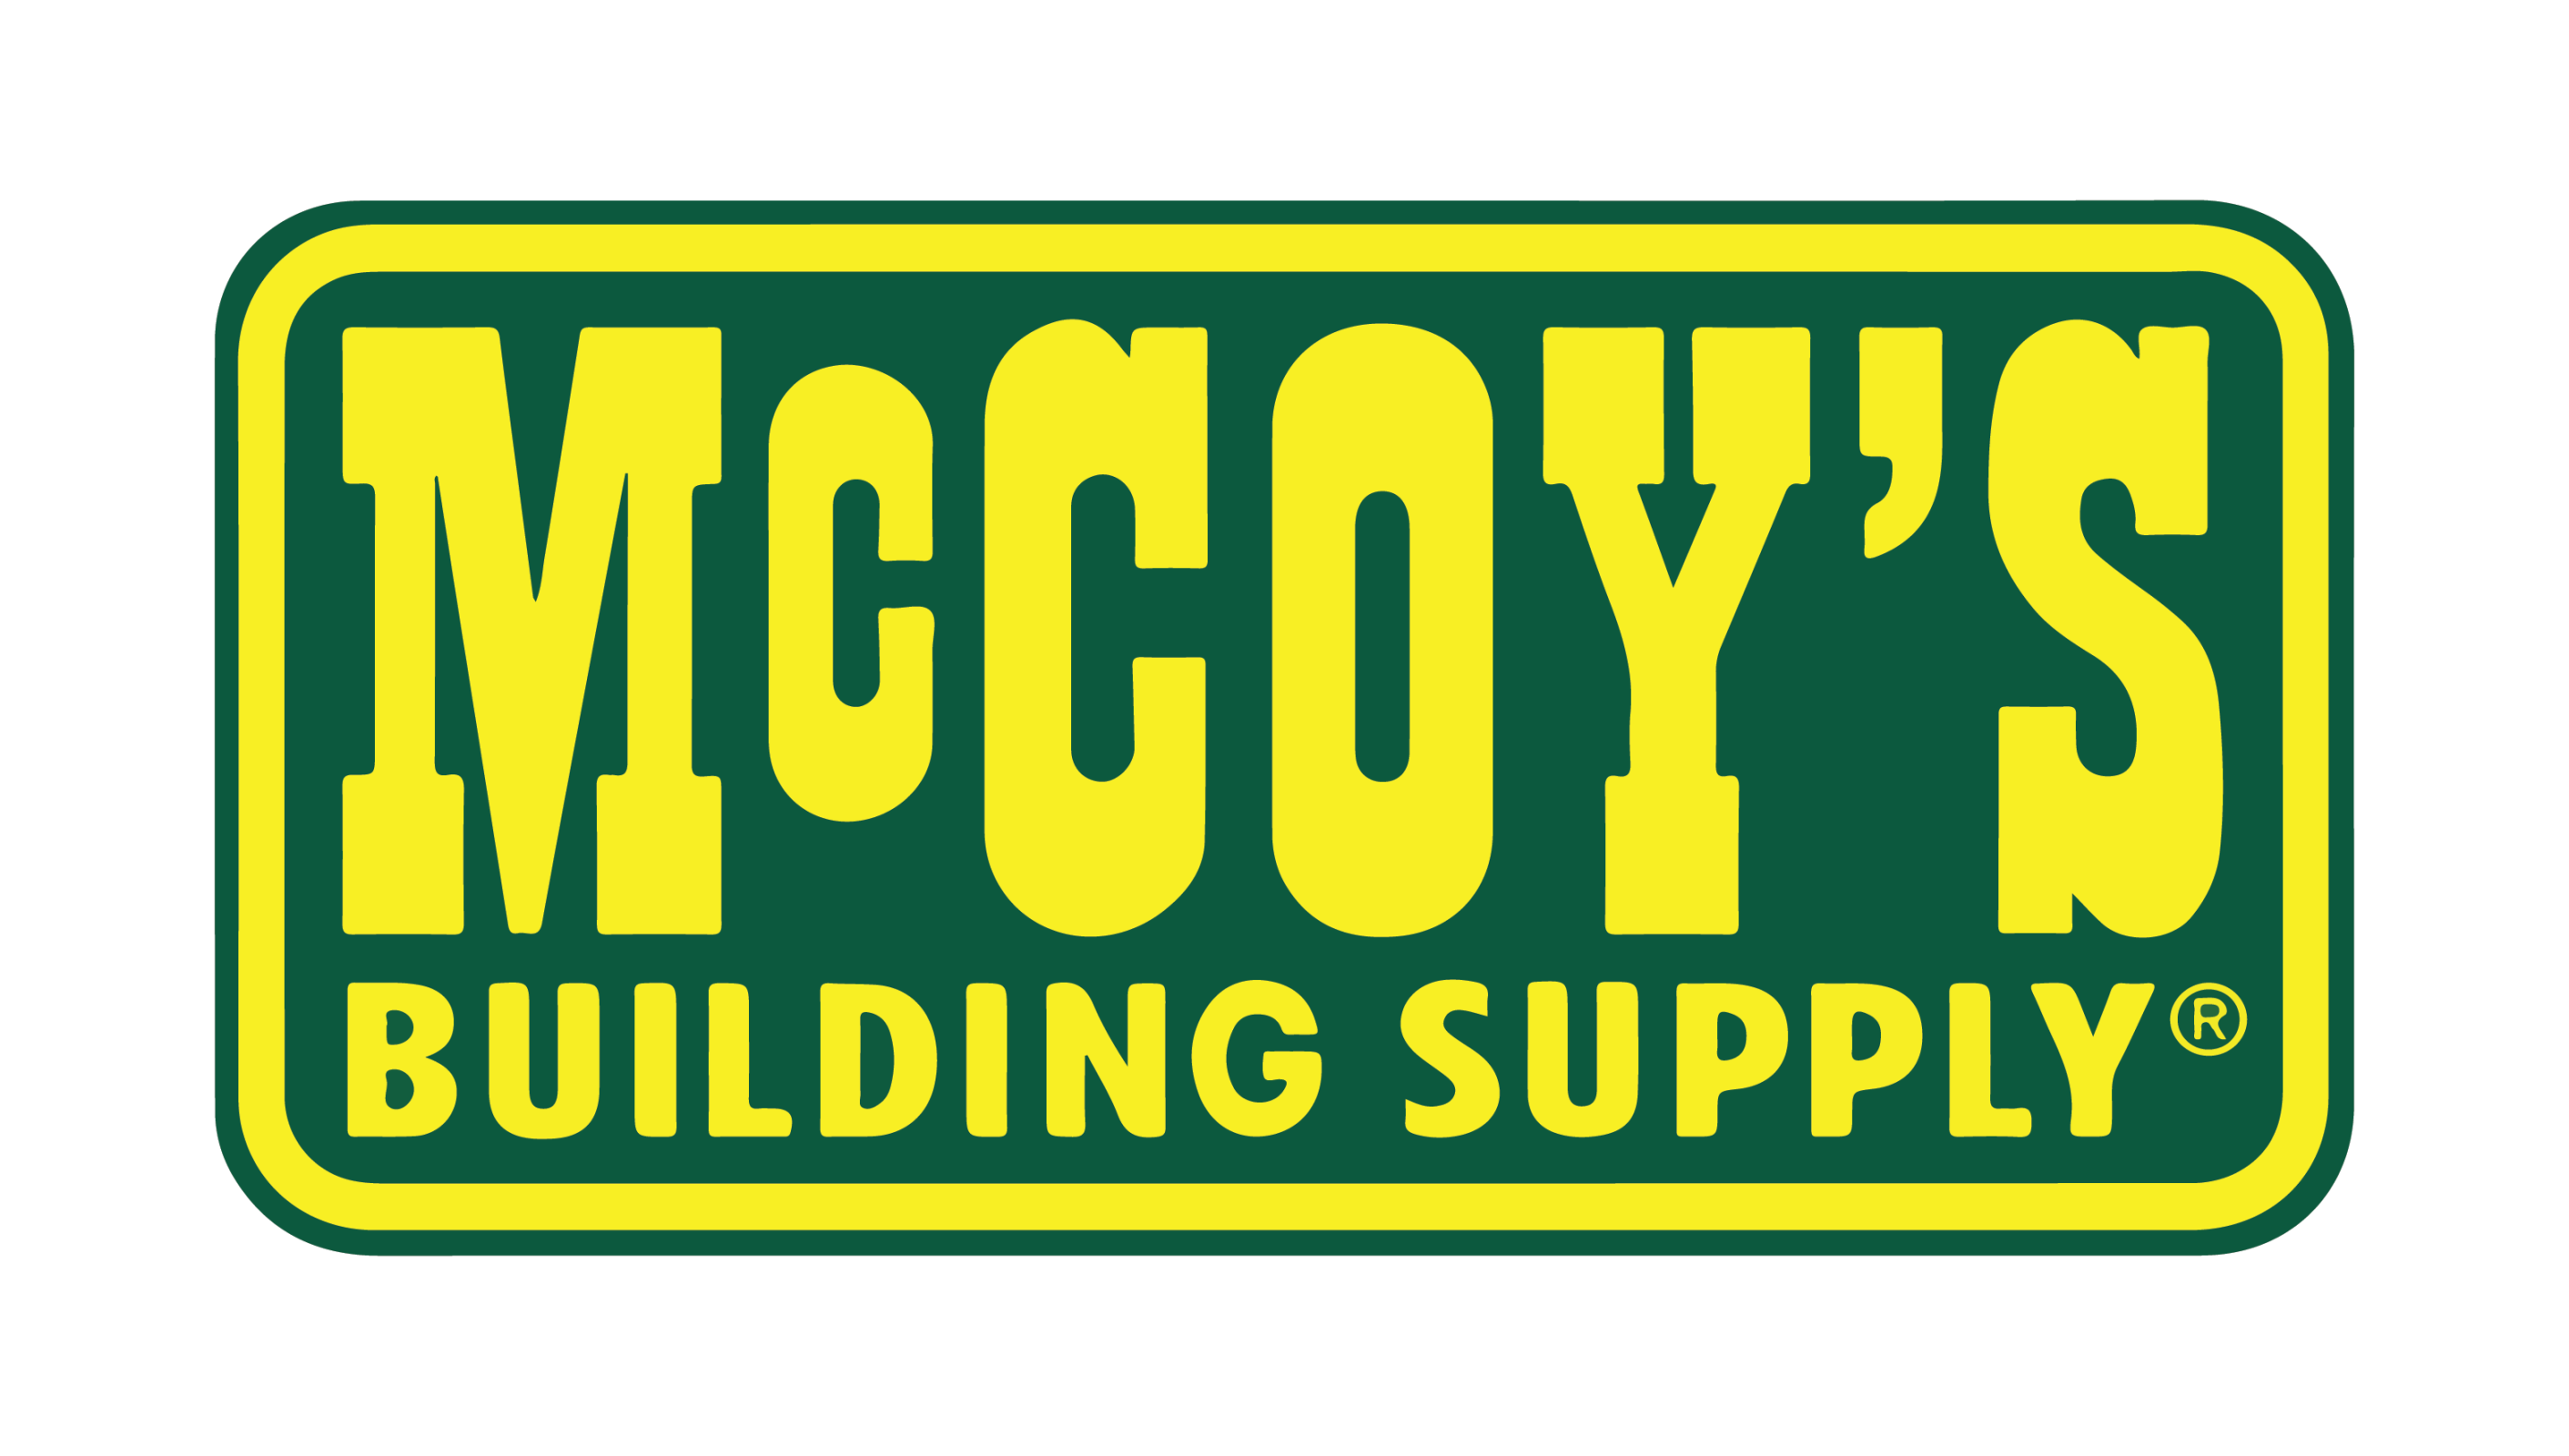 McCoy’s - Building supplies's Image